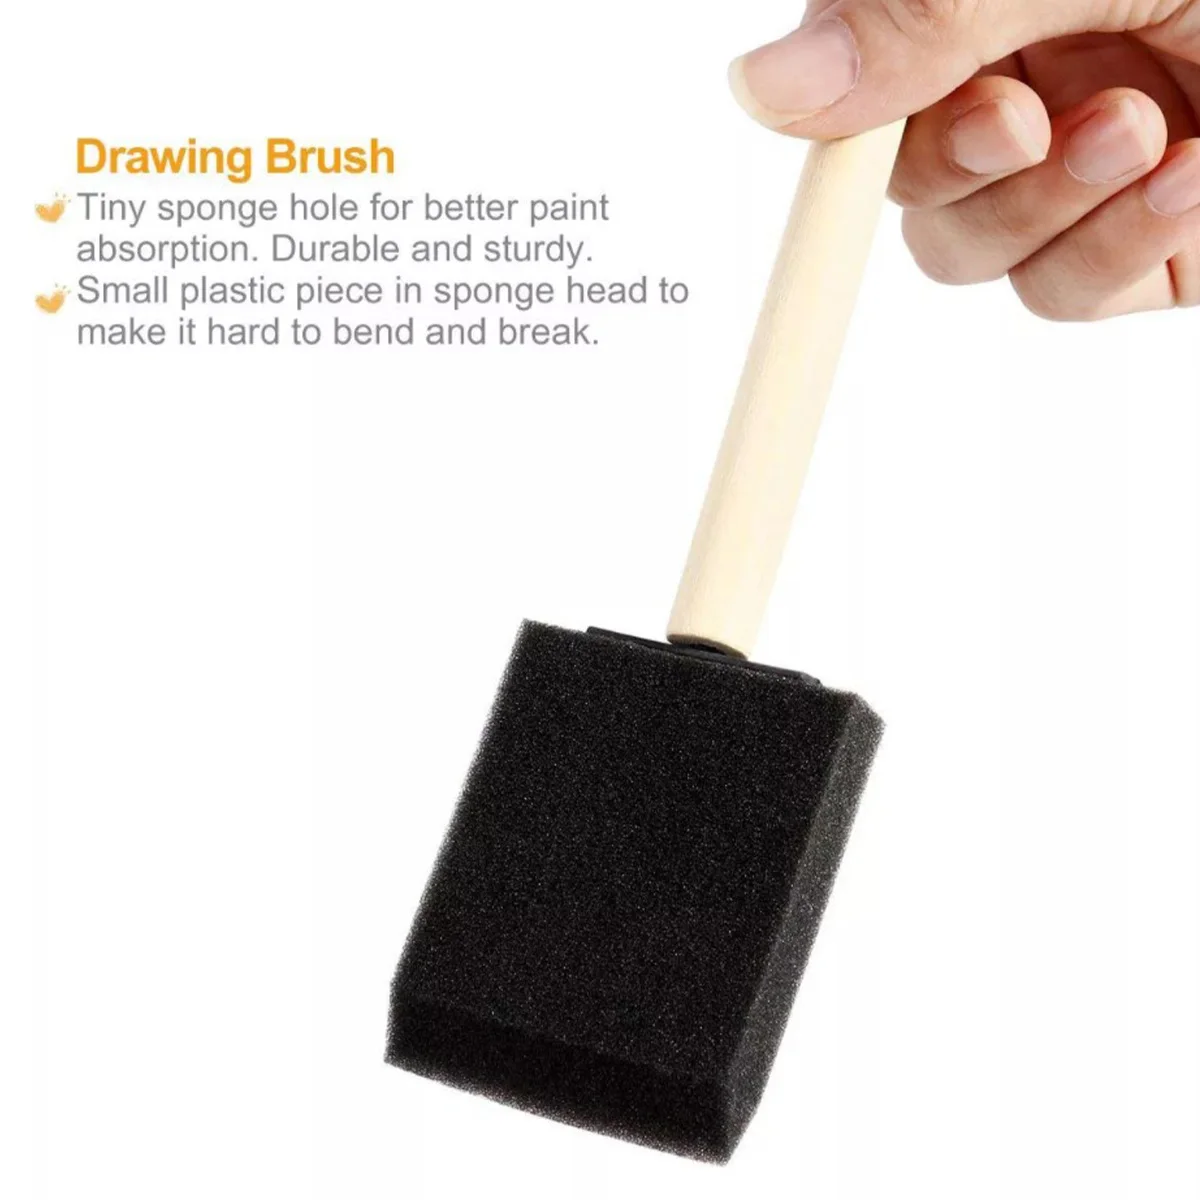 50pcs Foam Paint Brushes, Sponge Paint Brush Sponge Brush Foam Brush Set Reusable Paint Foam Brush Foam Paint Brush, for Art Classes DIY Projects